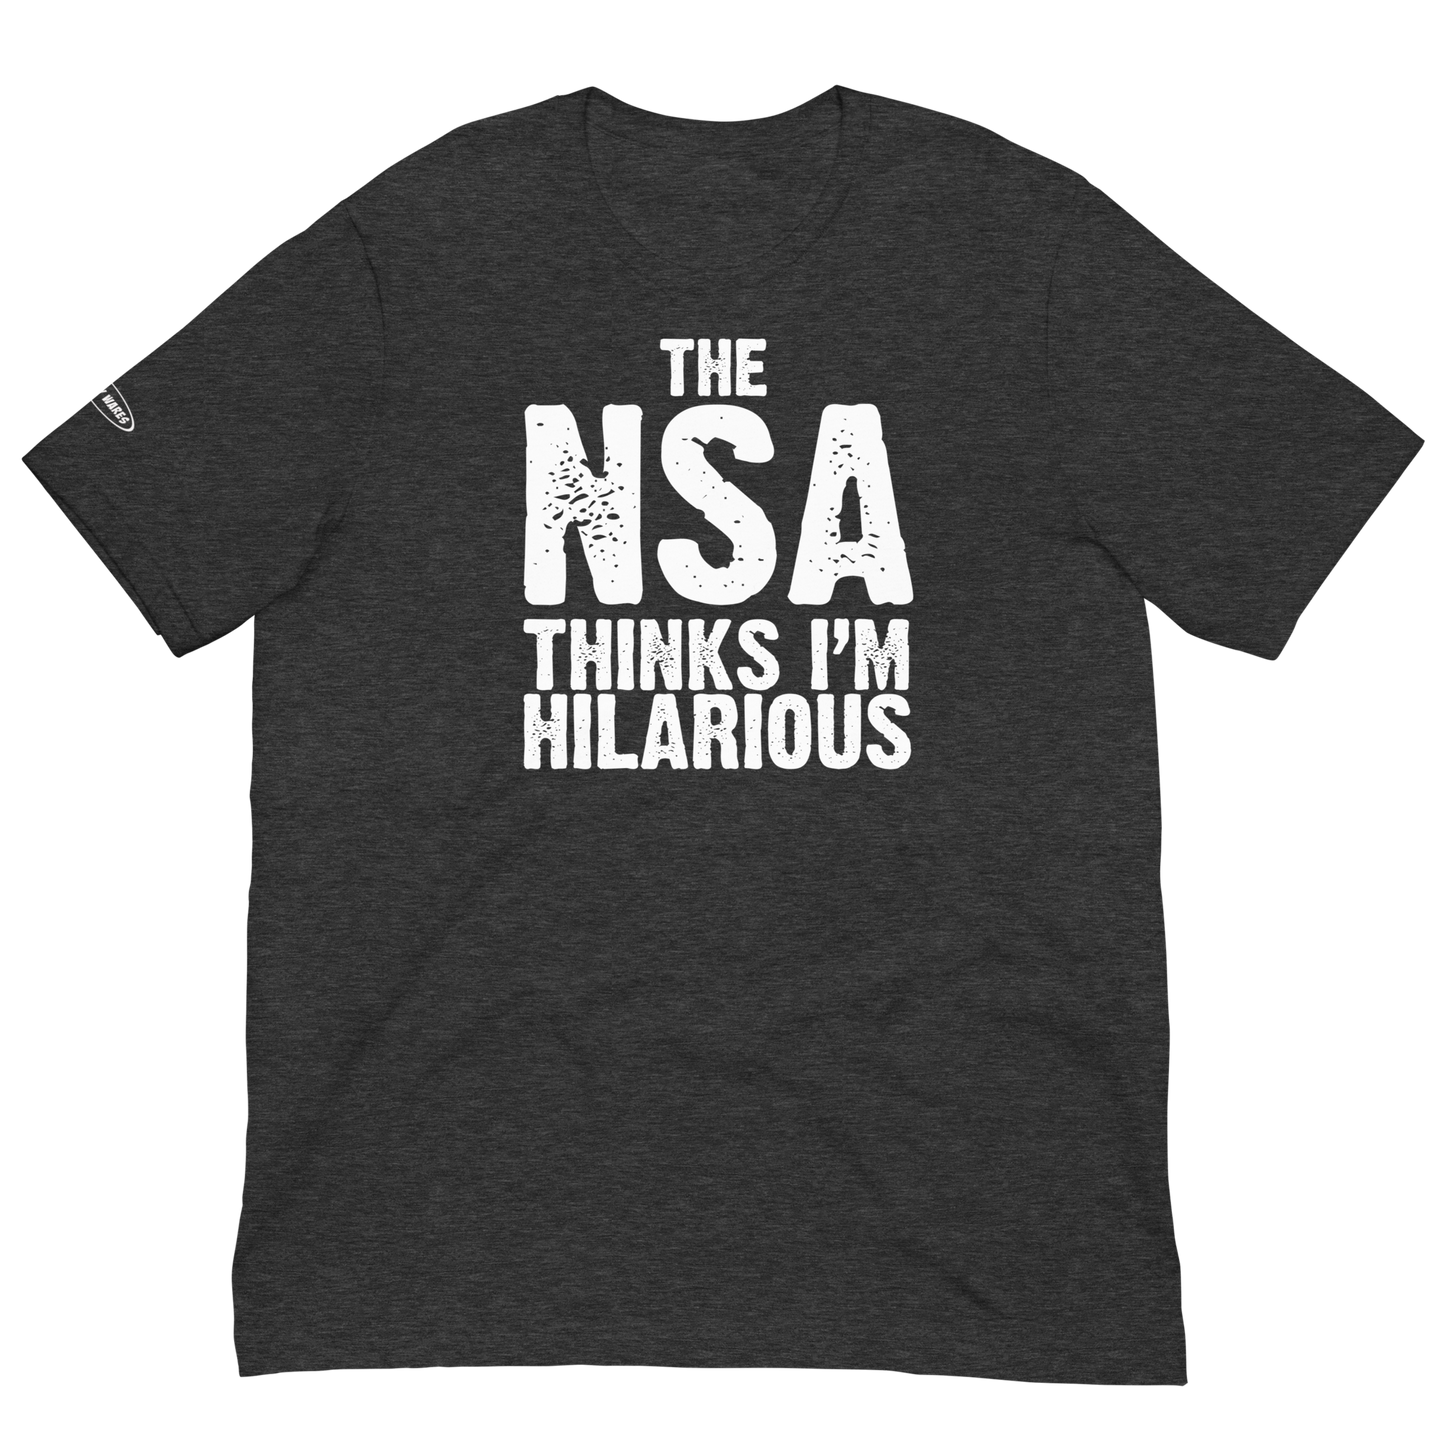 Unisex - The NSA thinks i'm hilarious - Funny T-shirt